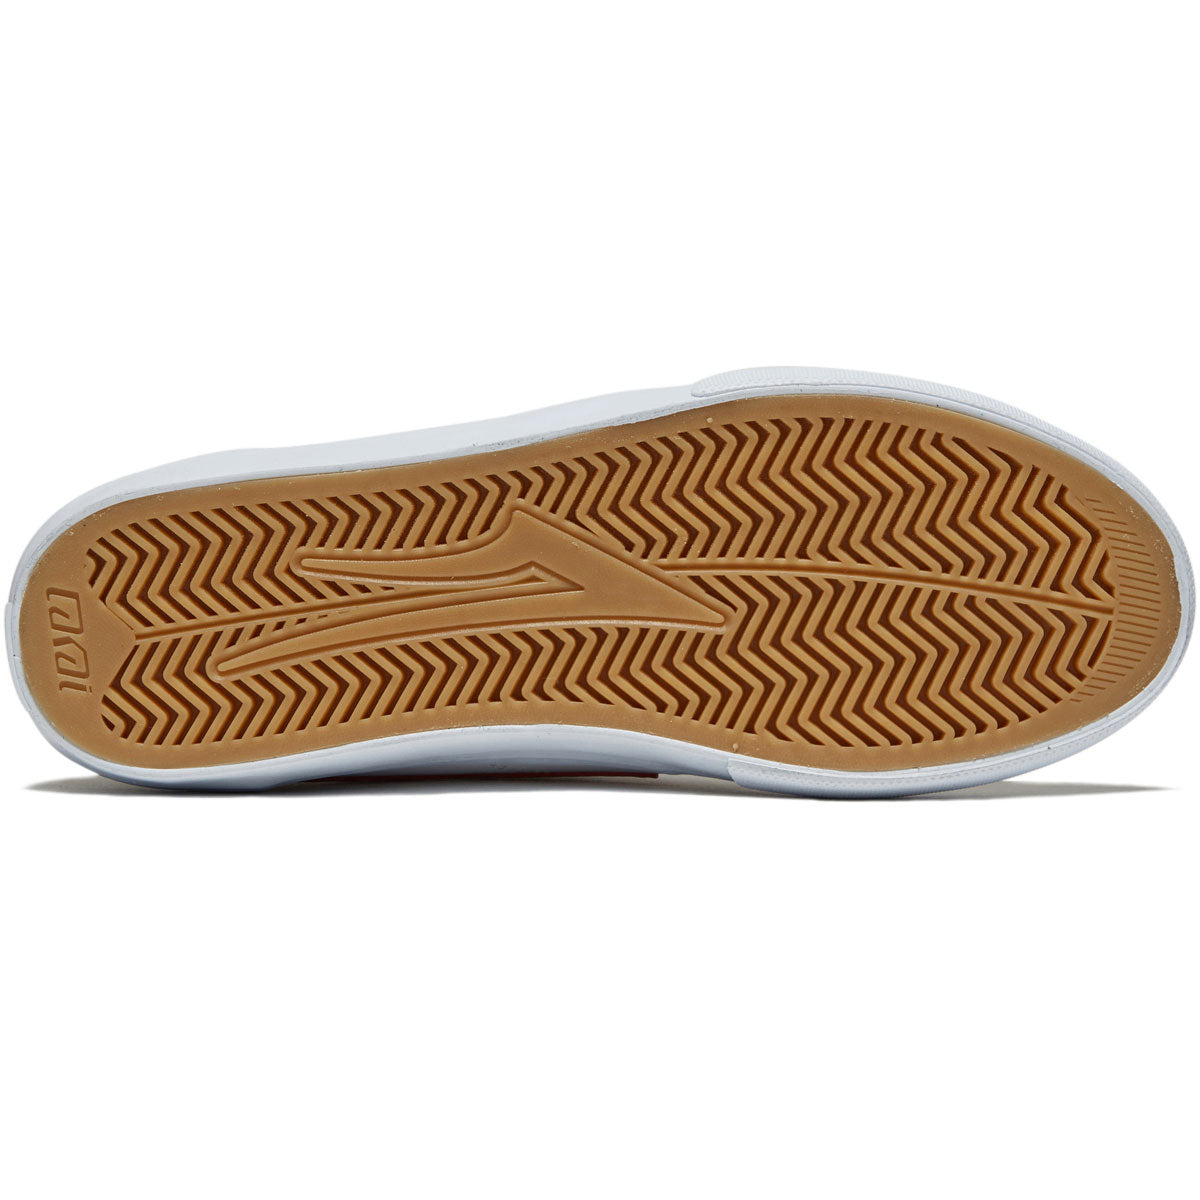 Lakai Griffin Shoes - White/Burgundy Leather image 4